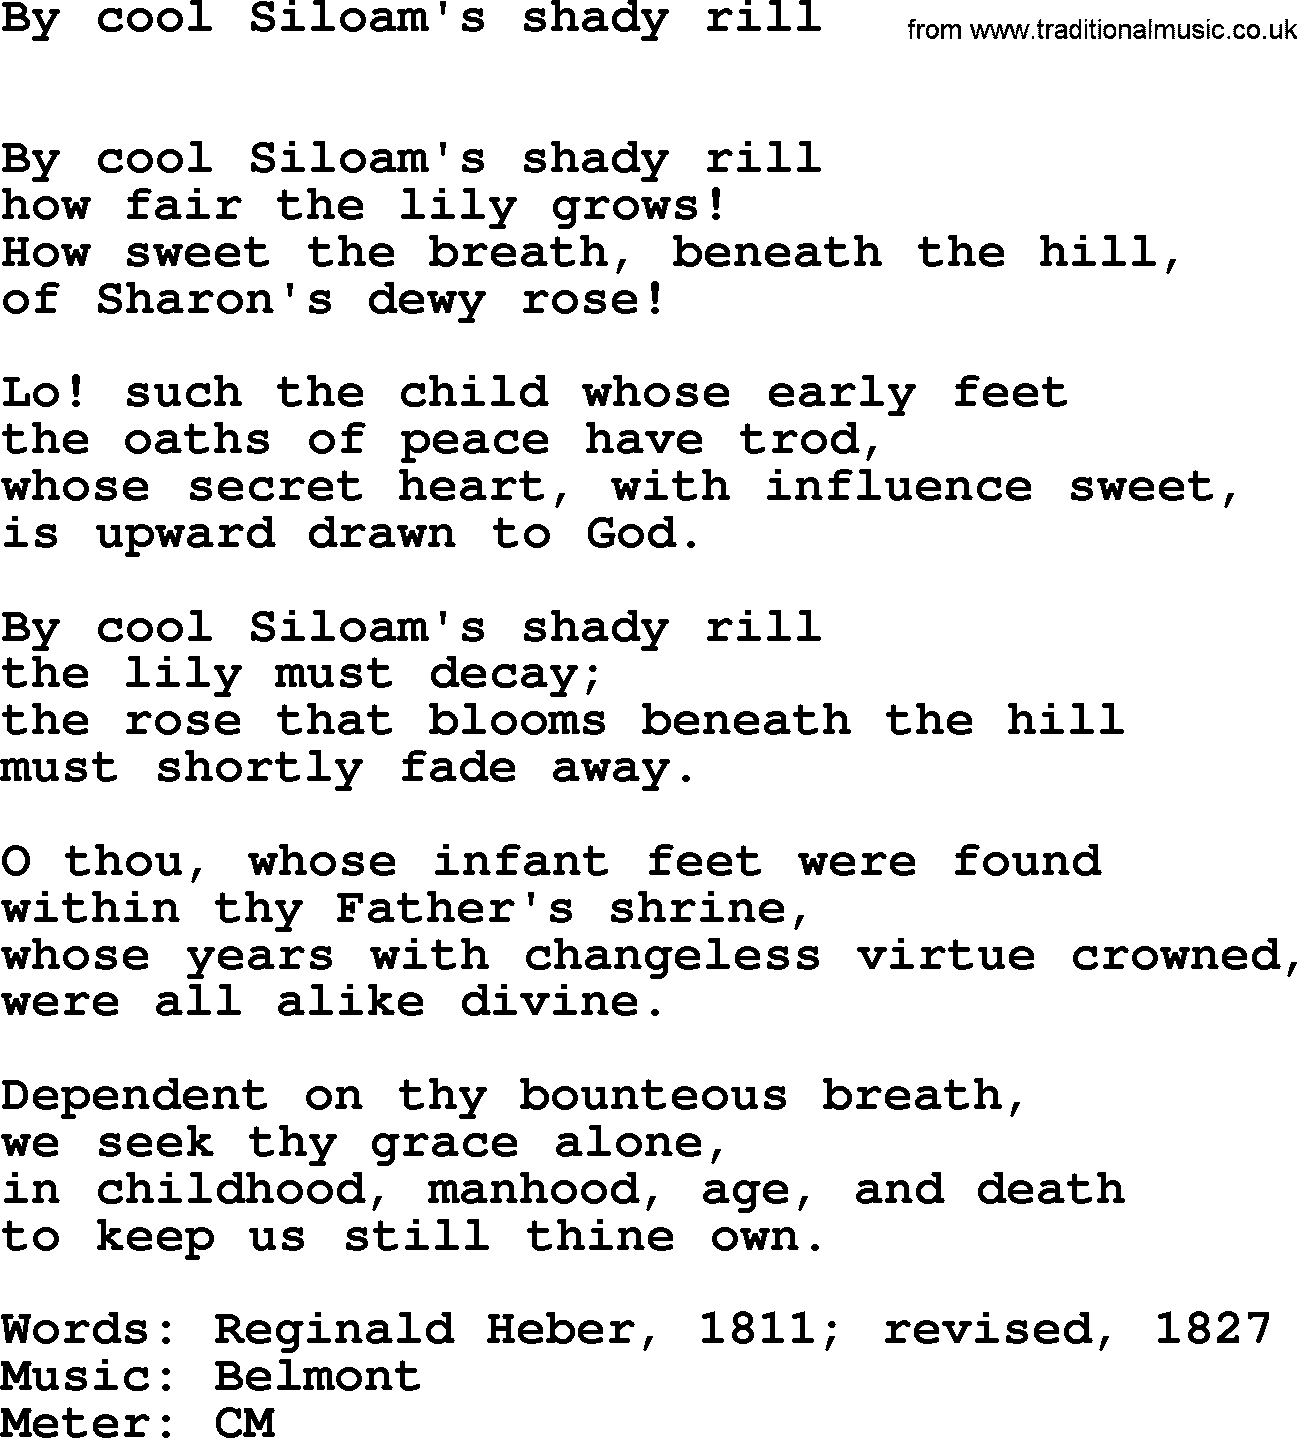 Book of Common Praise Hymn: By Cool Siloam's Shady Rill.txt lyrics with midi music